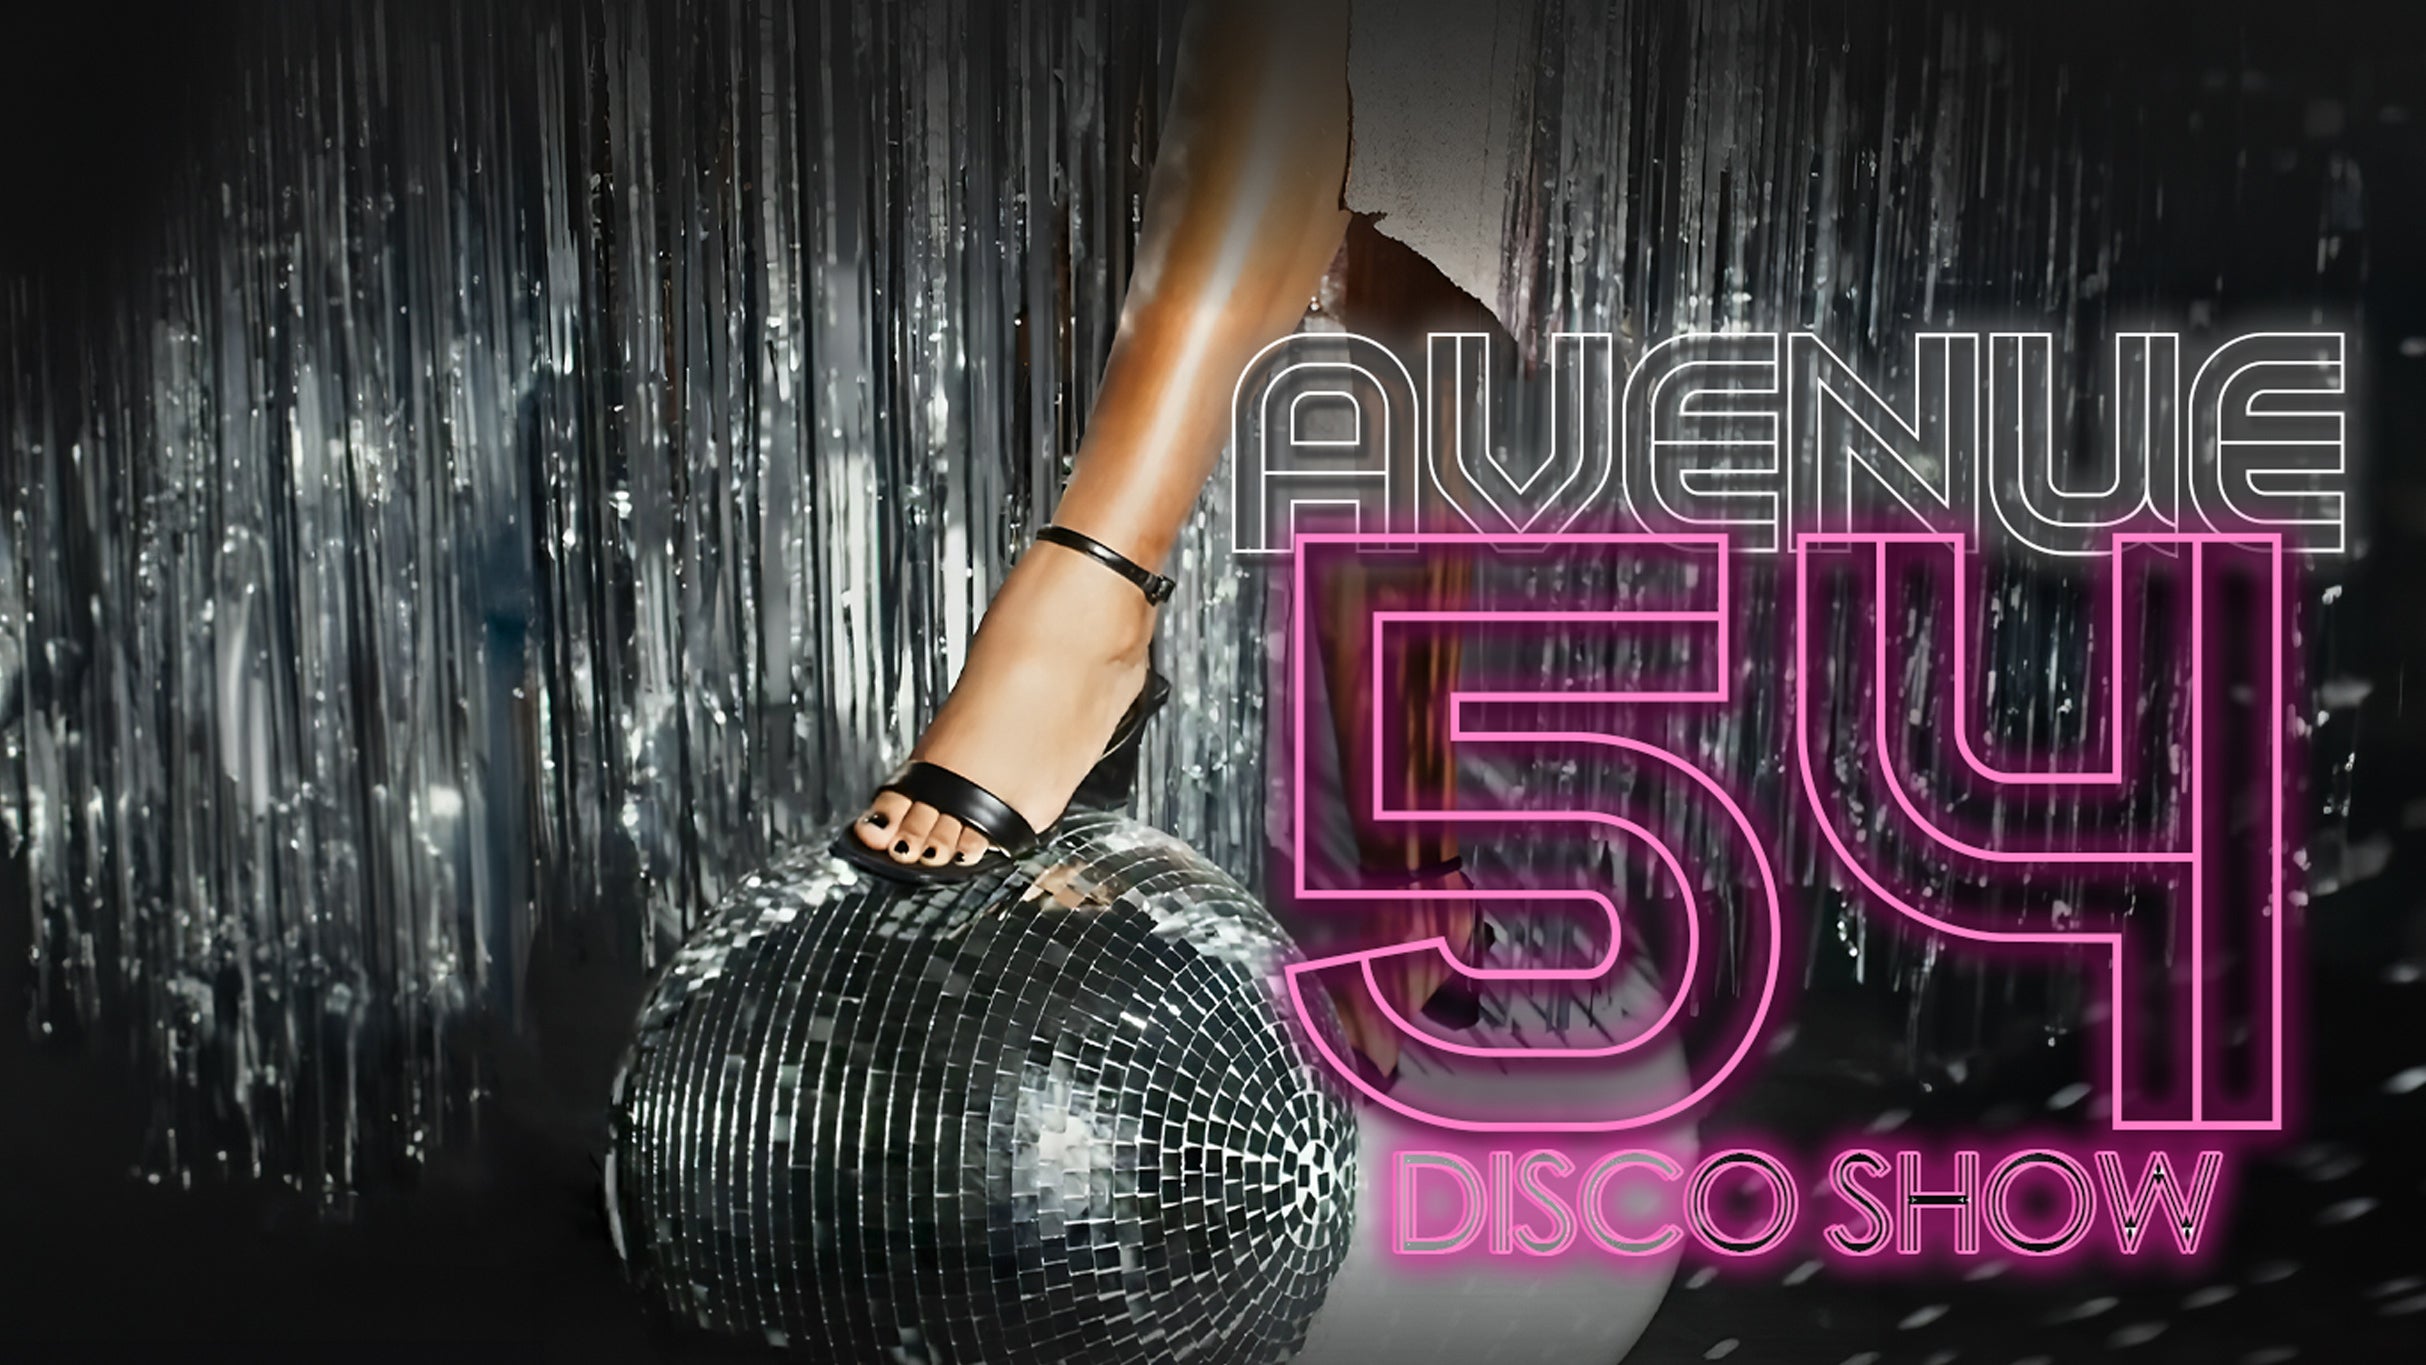 Avenue 54 Disco Show in Montreal promo photo for 2eA50 presale offer code